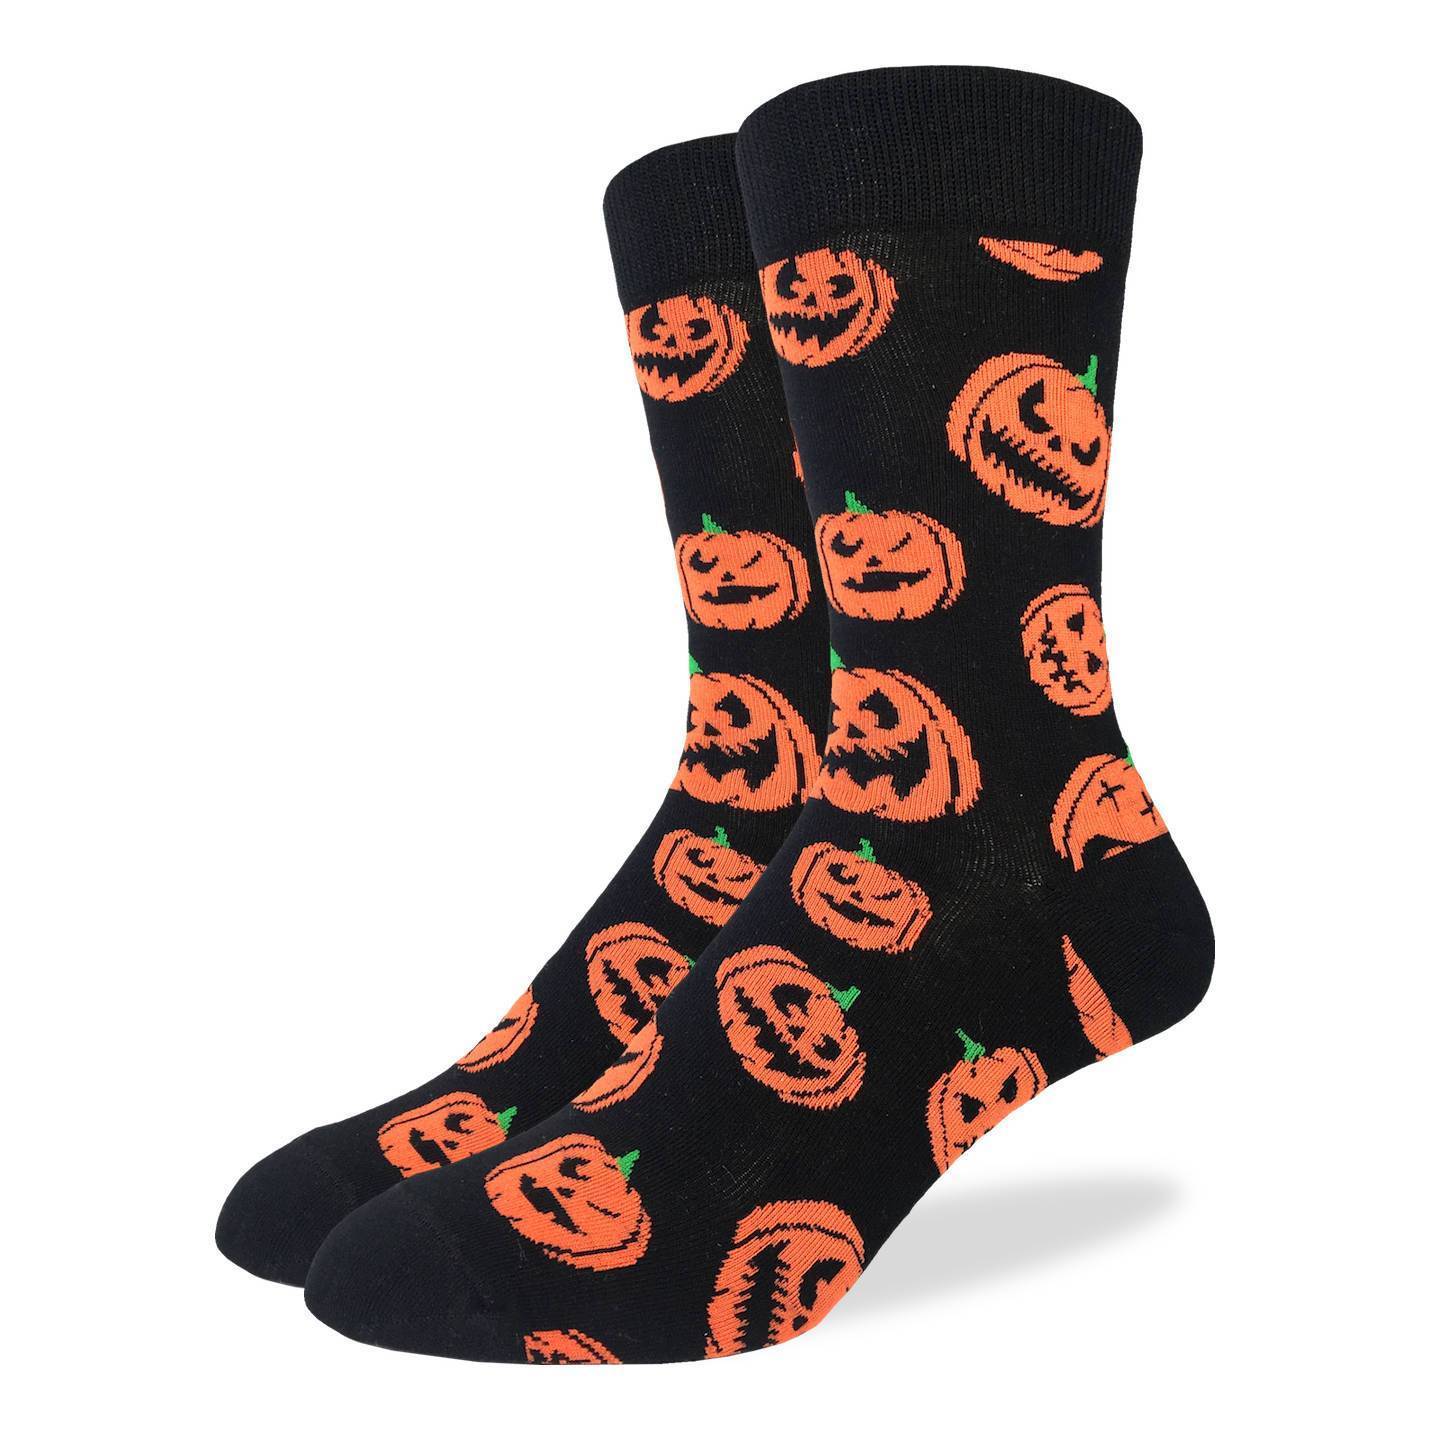 Men's Halloween Pumpkins Socks – Good Luck Sock